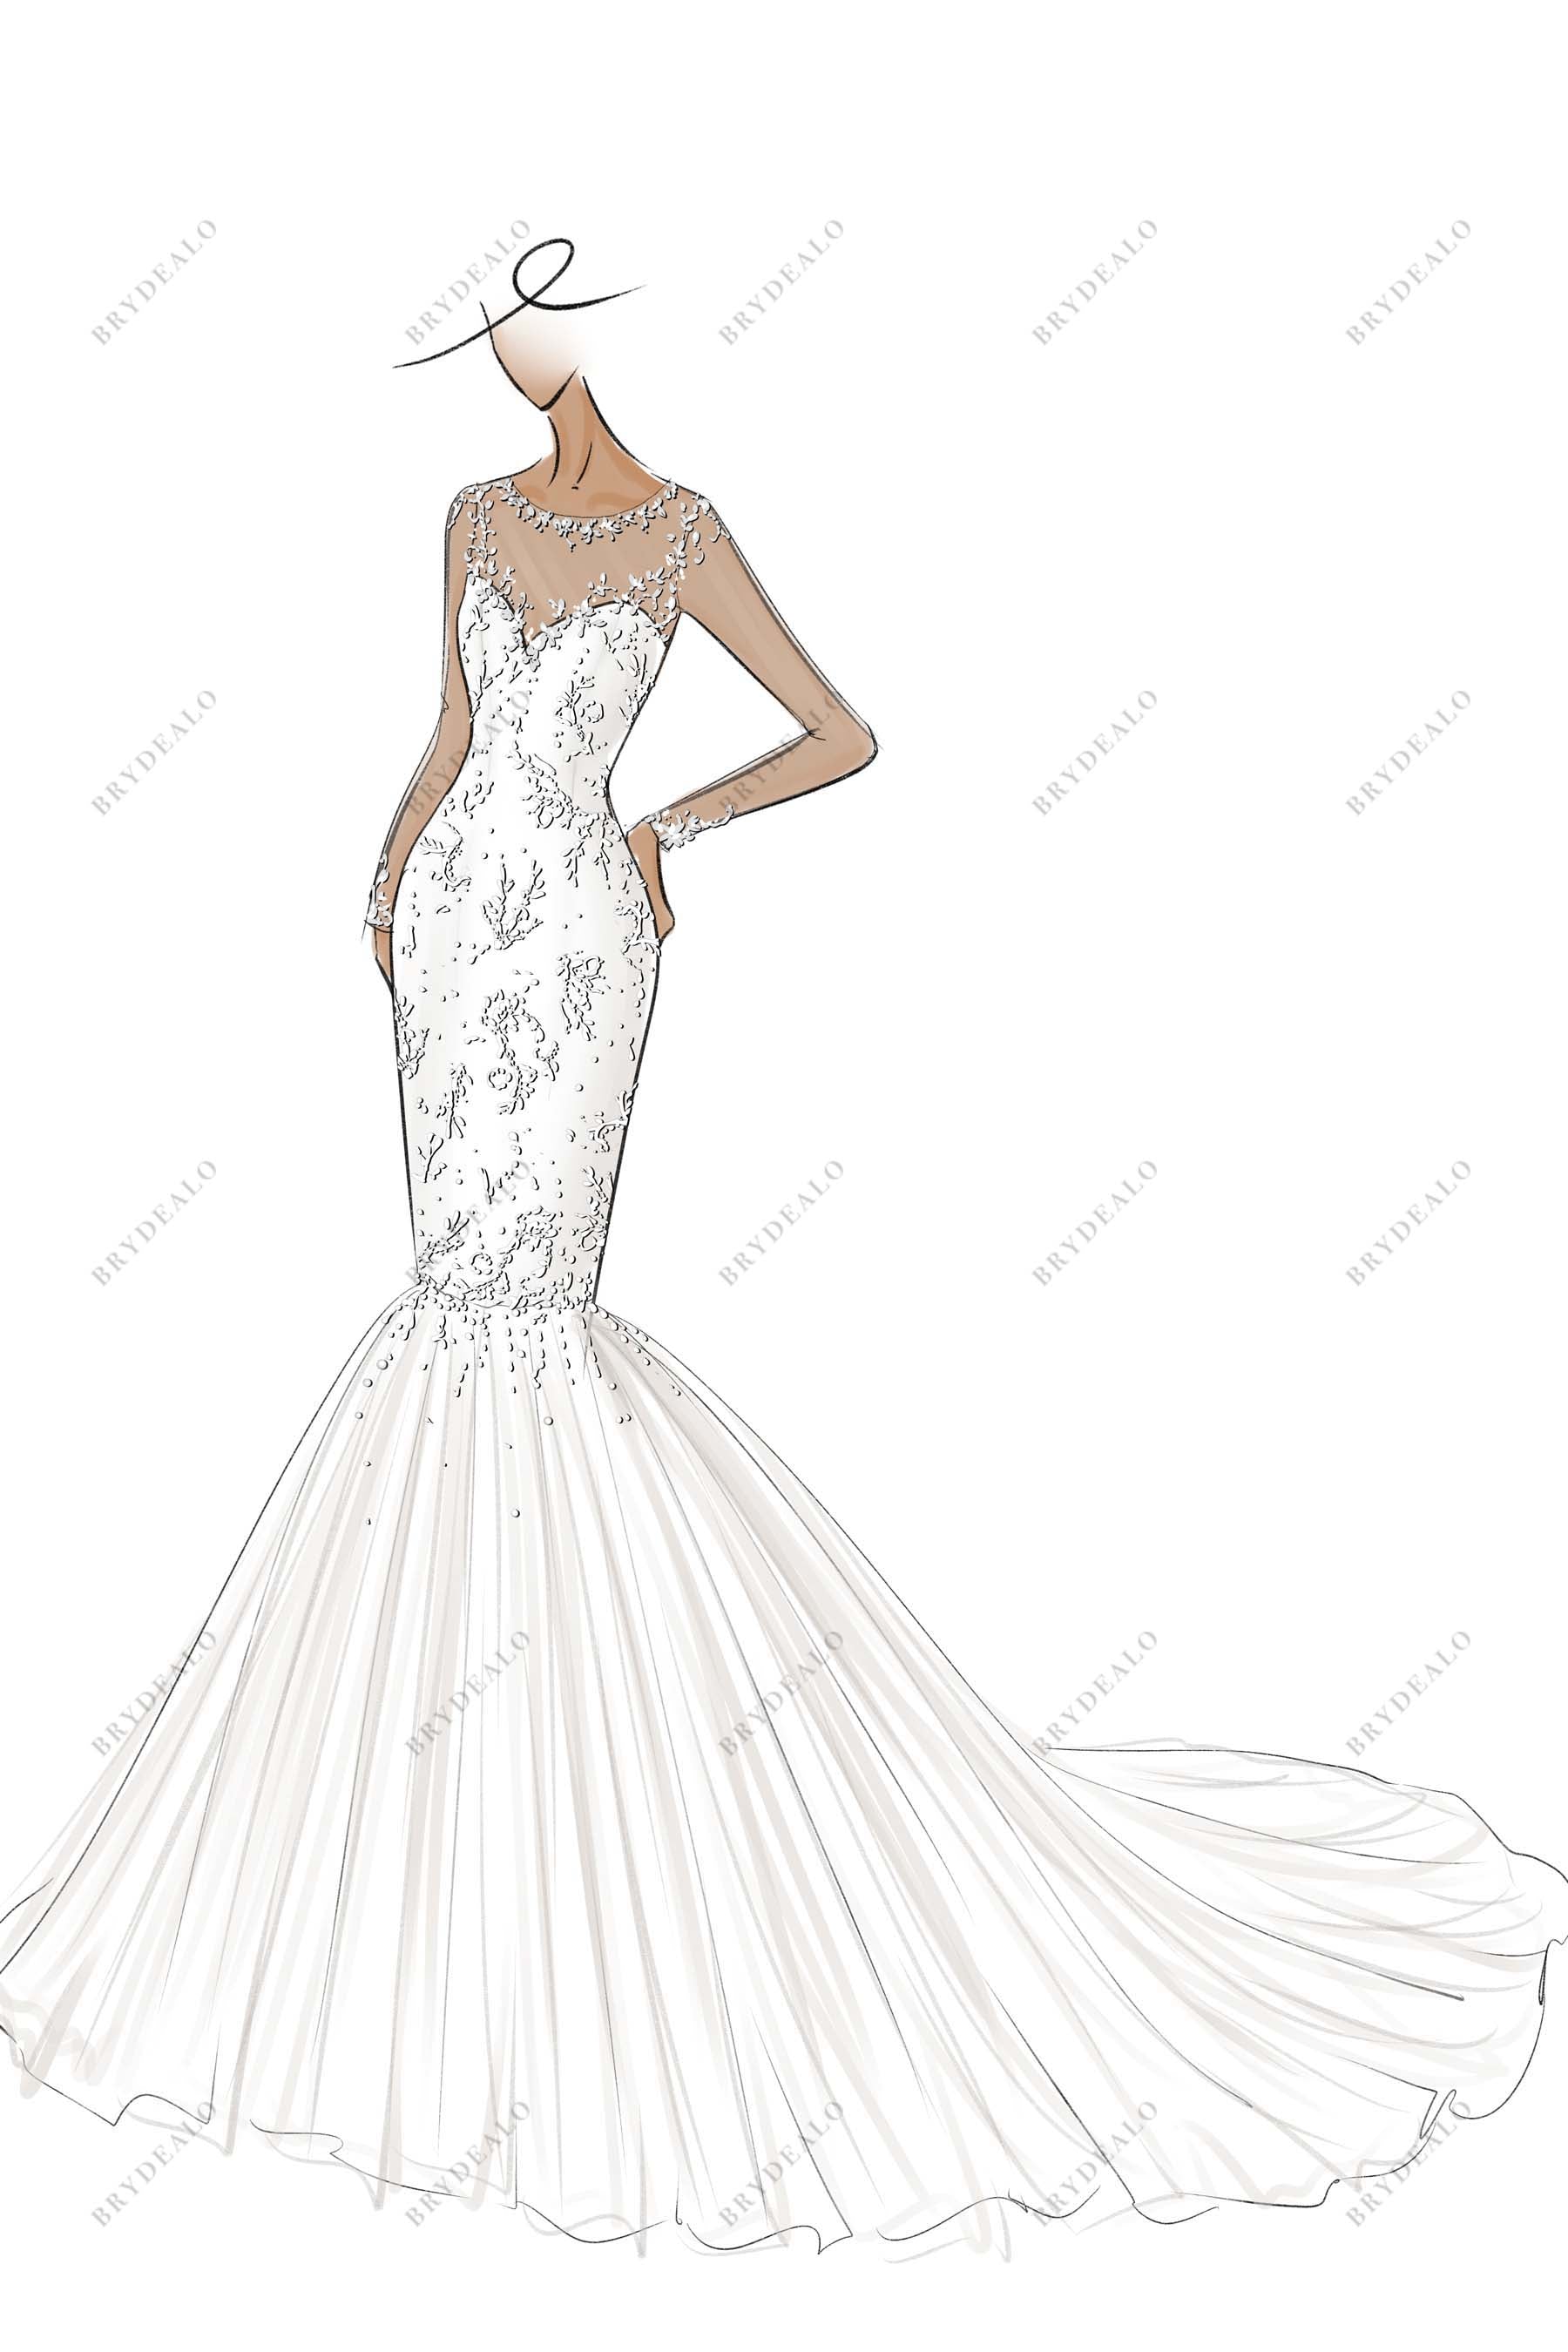 Lace Illusion Neck Tulle Designer Trumpet Bridal Dress Sketch